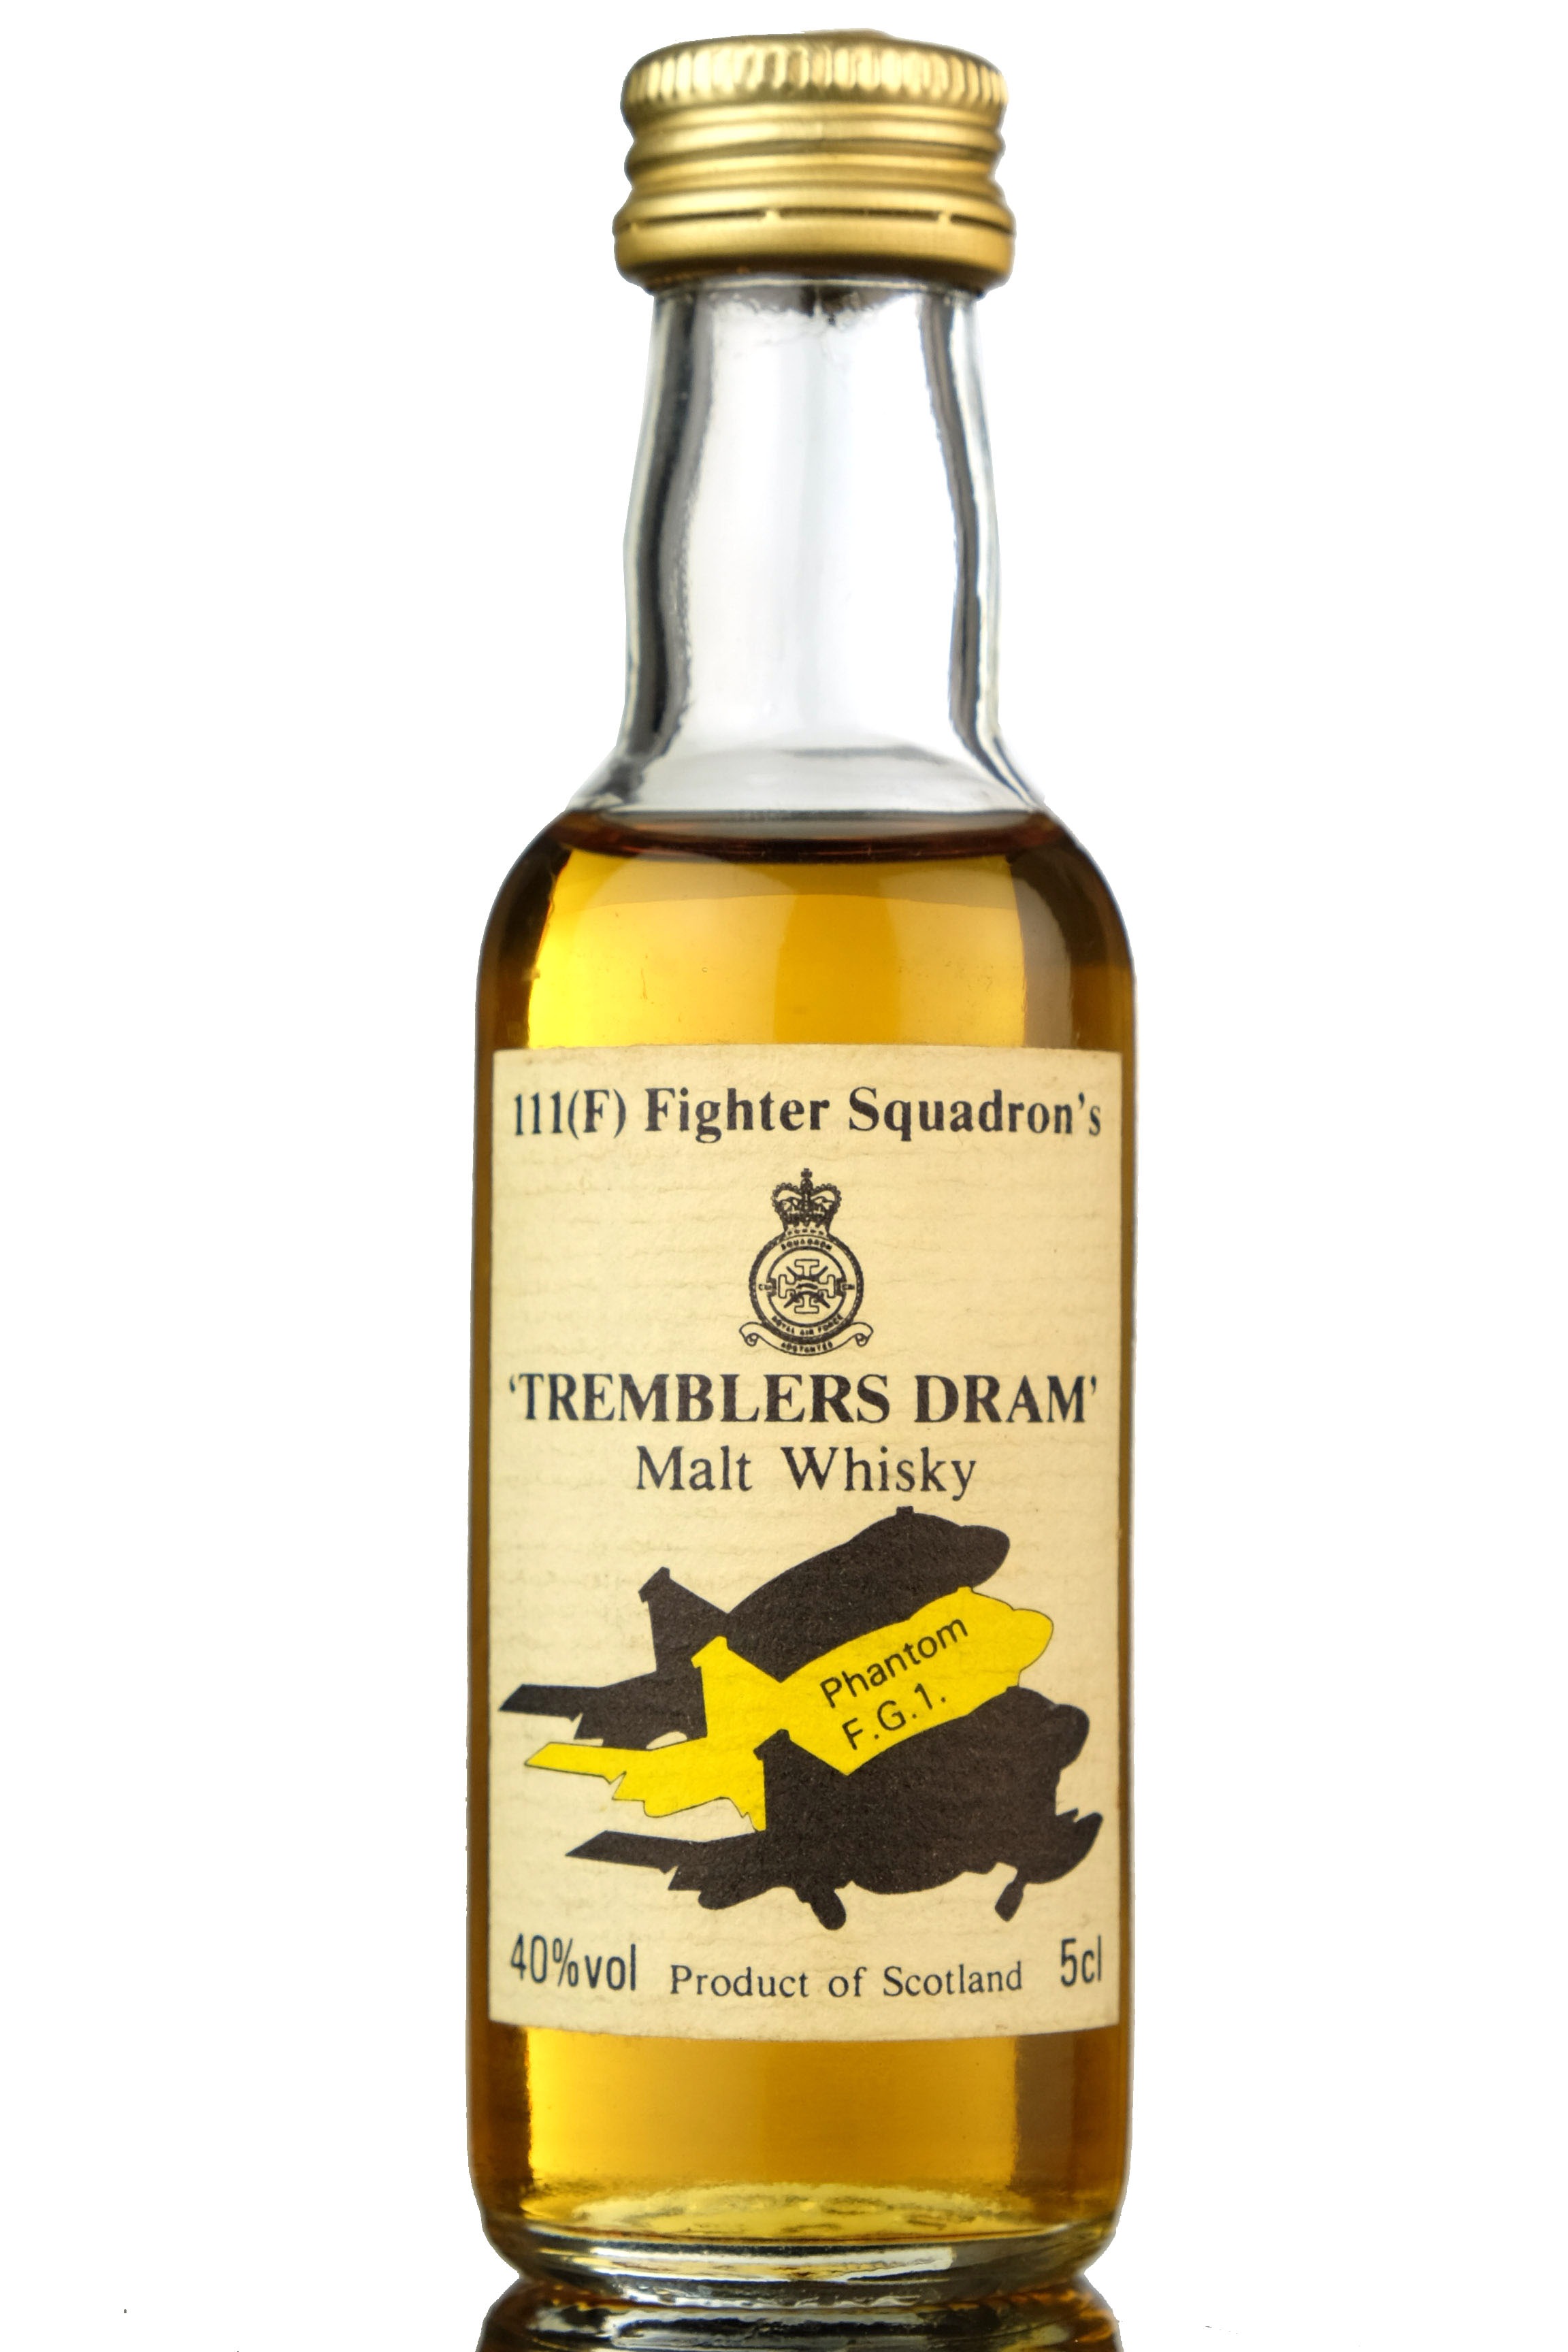 Tremblers Dram - 111(F) Fighter Squadrons Miniature